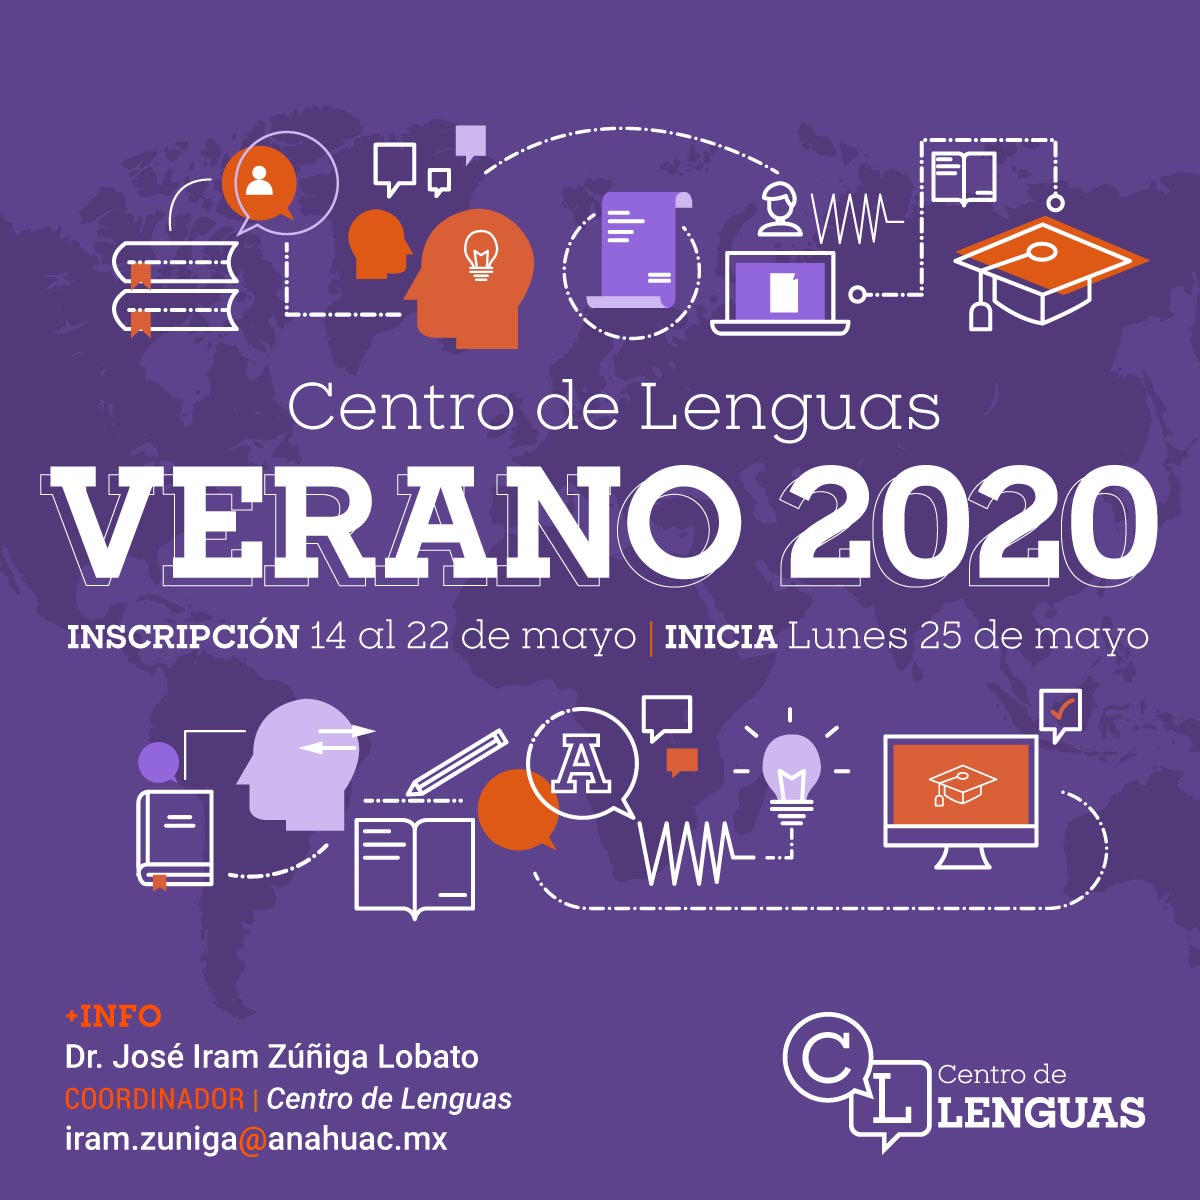 Centro de Lenguas Verano 2020